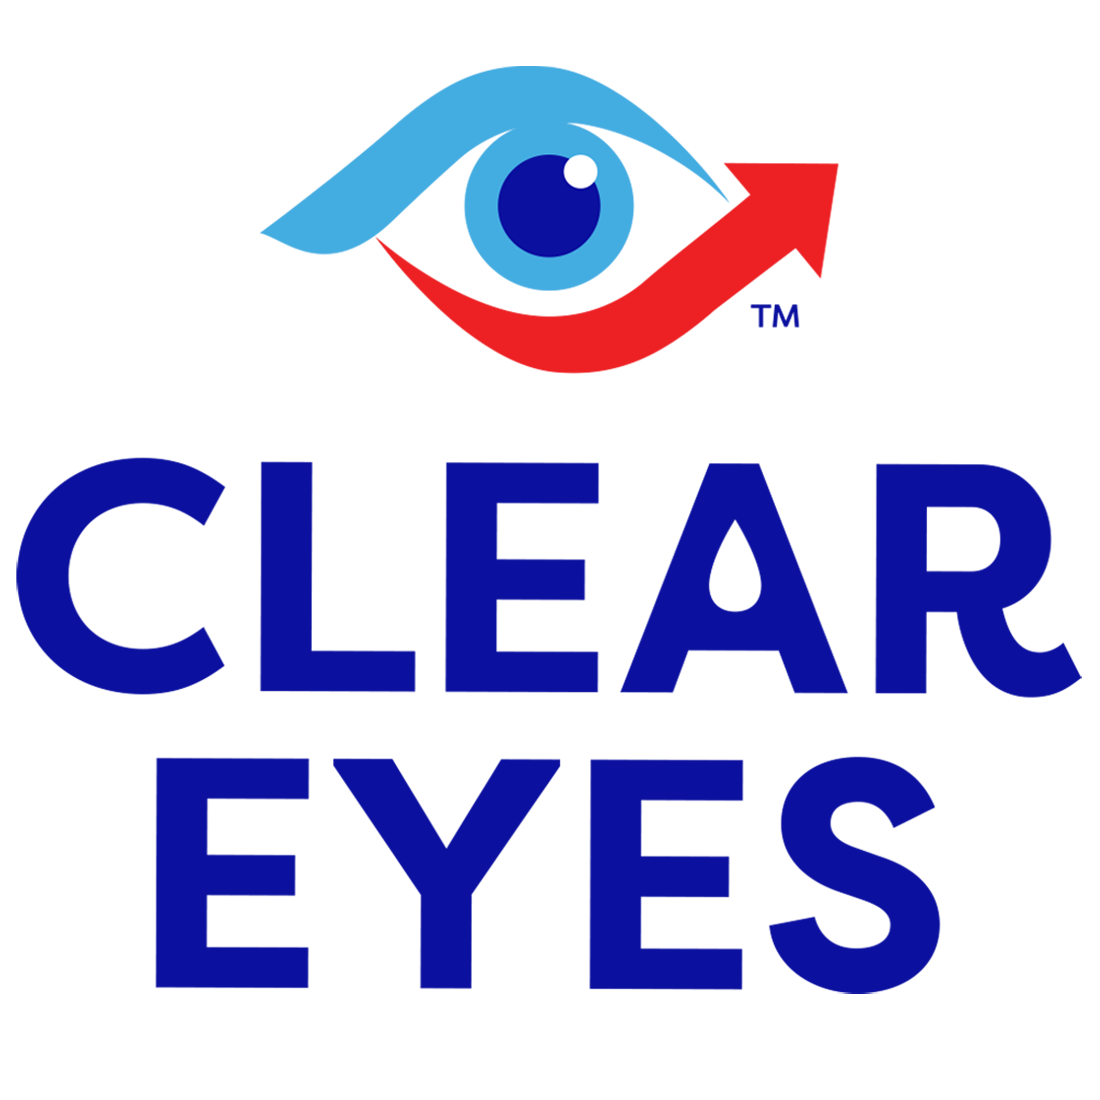 Clear Eyes Complete 7 Symptom Relief Eye Drops - 0.5 OZ - Union Pharmacy